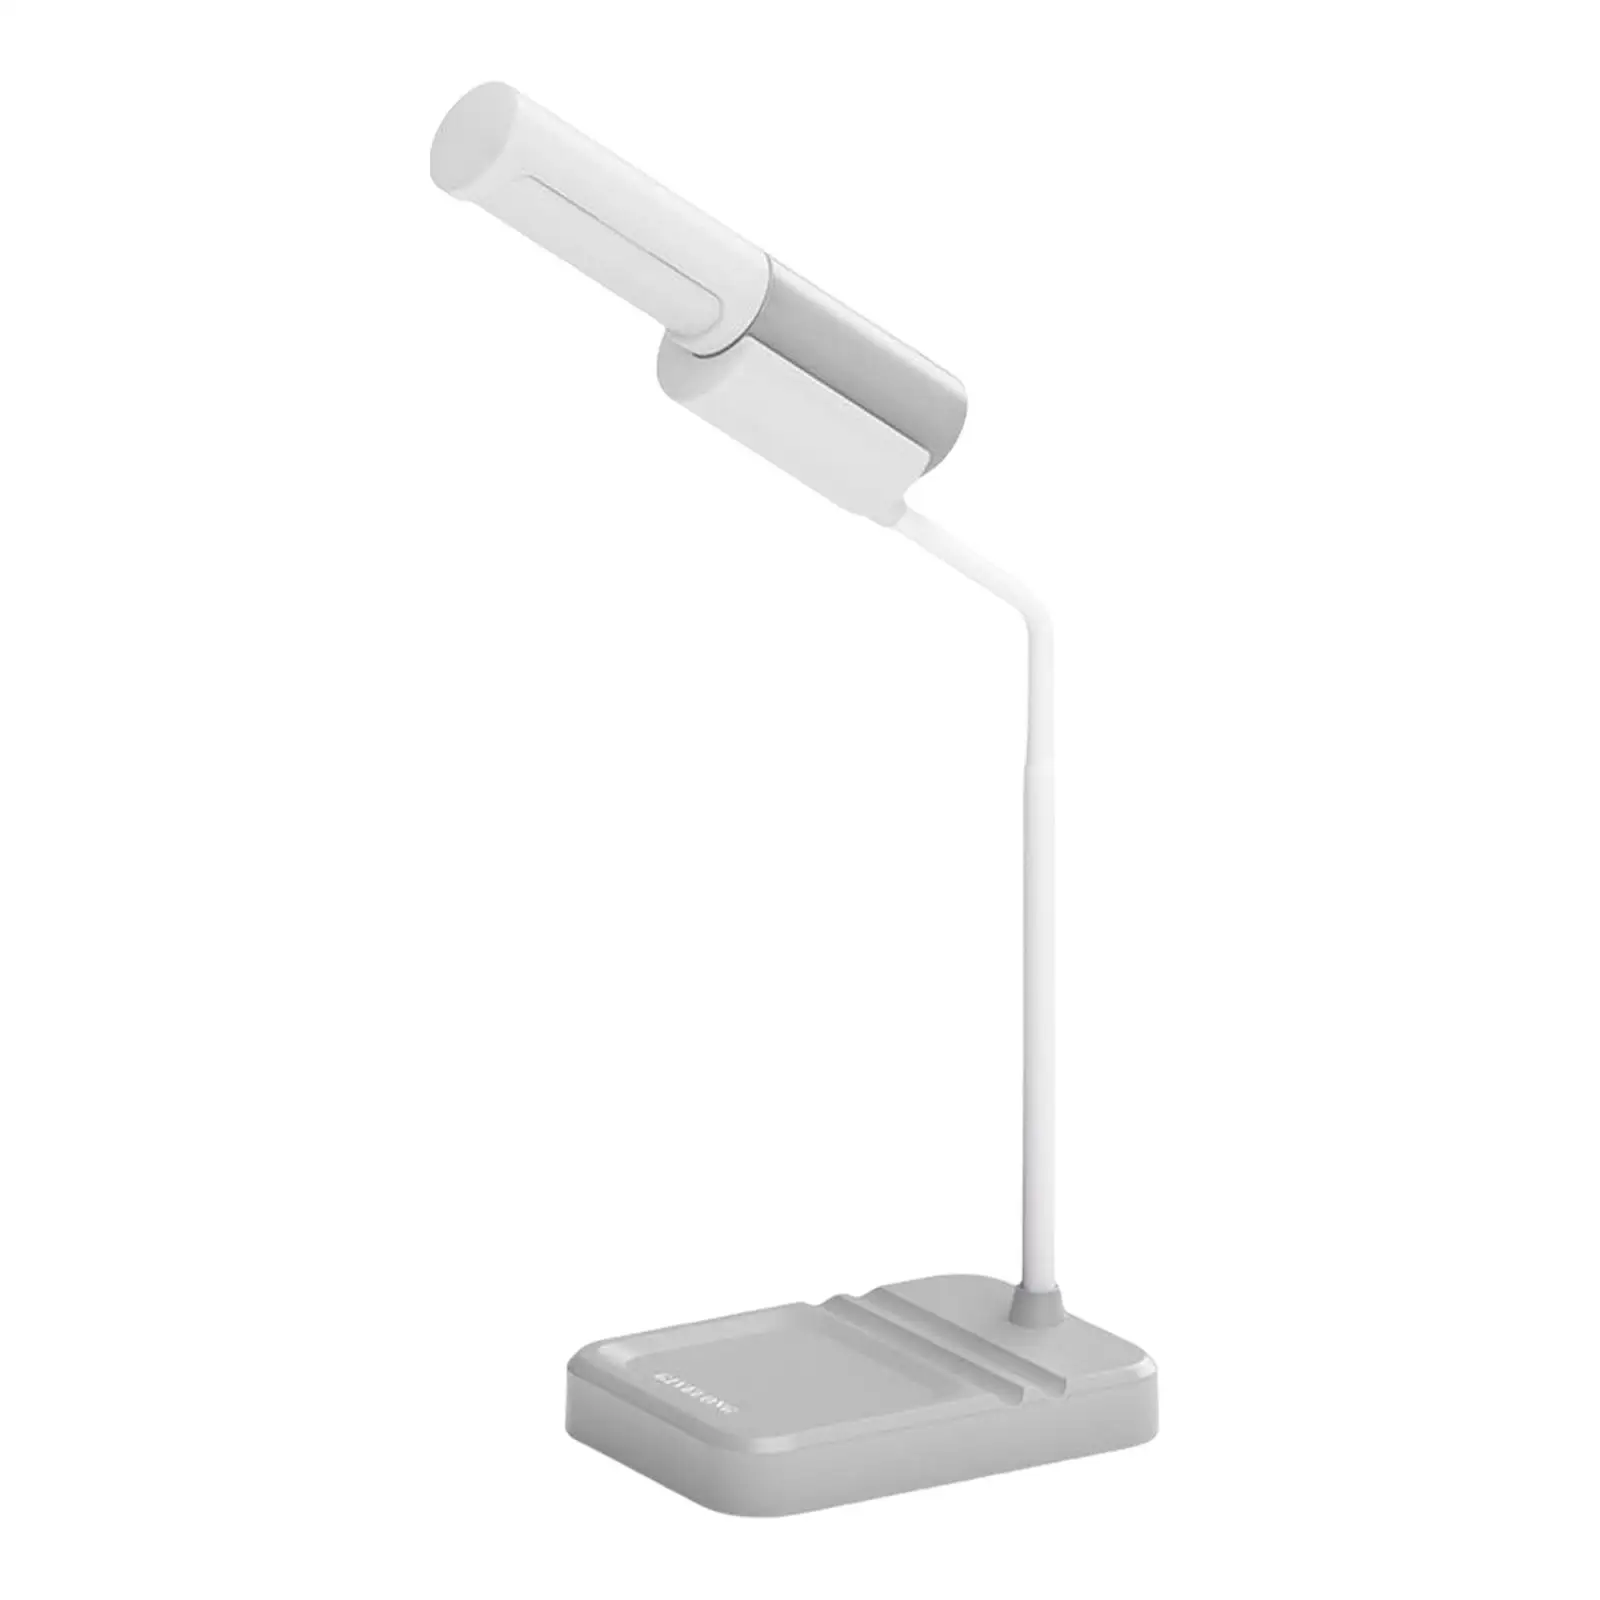 Dimming LED Desk Lamp Bedside Table Light with Phone Holder Eye Protection USB Handheld Flashlight for Study Dorm Home Bedside